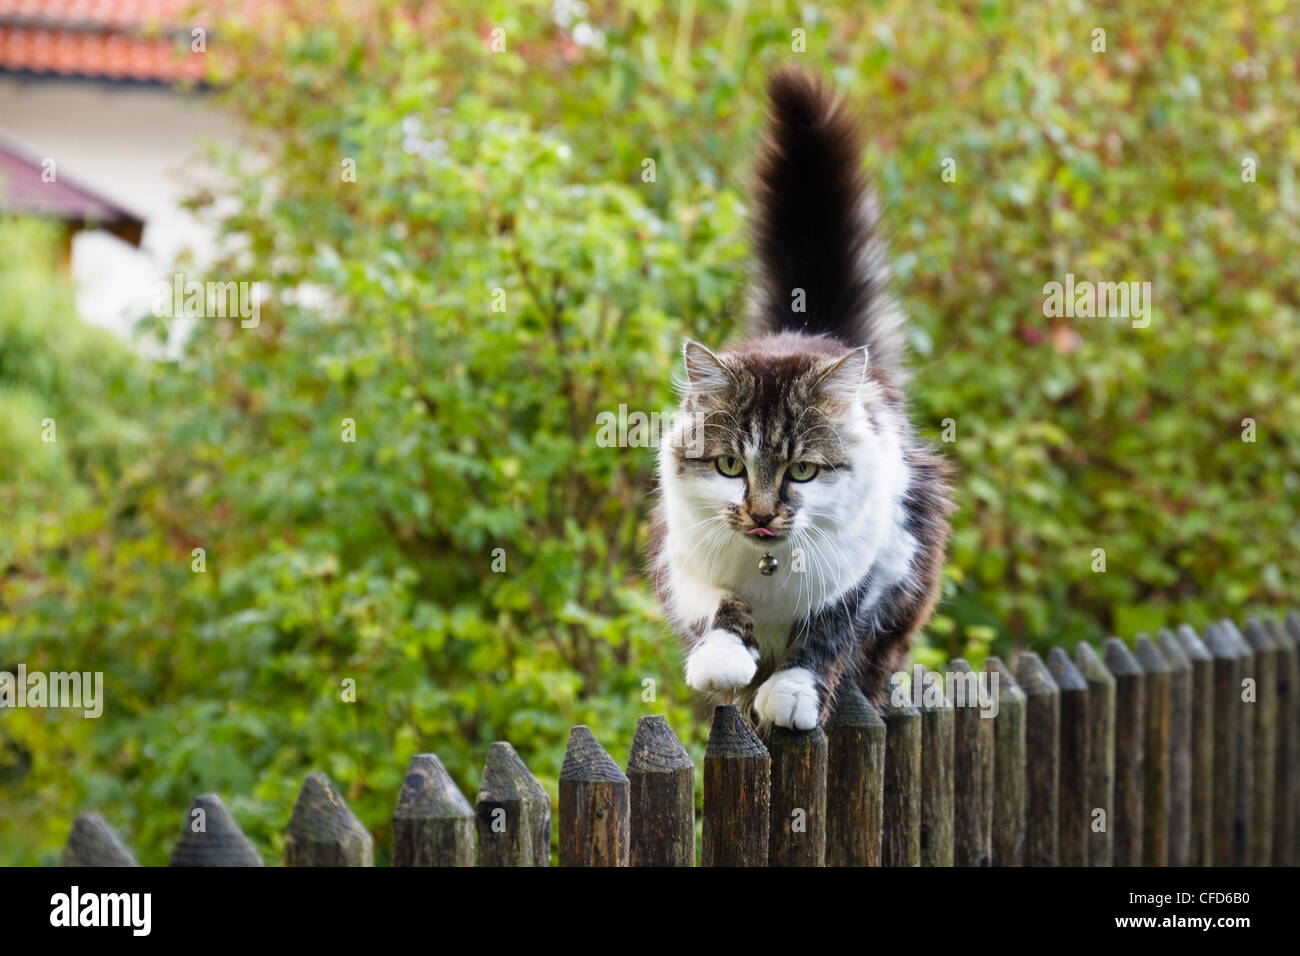 Domestic cat balancing on garden fence, Bavaria, Germany, Europe Stock Photo